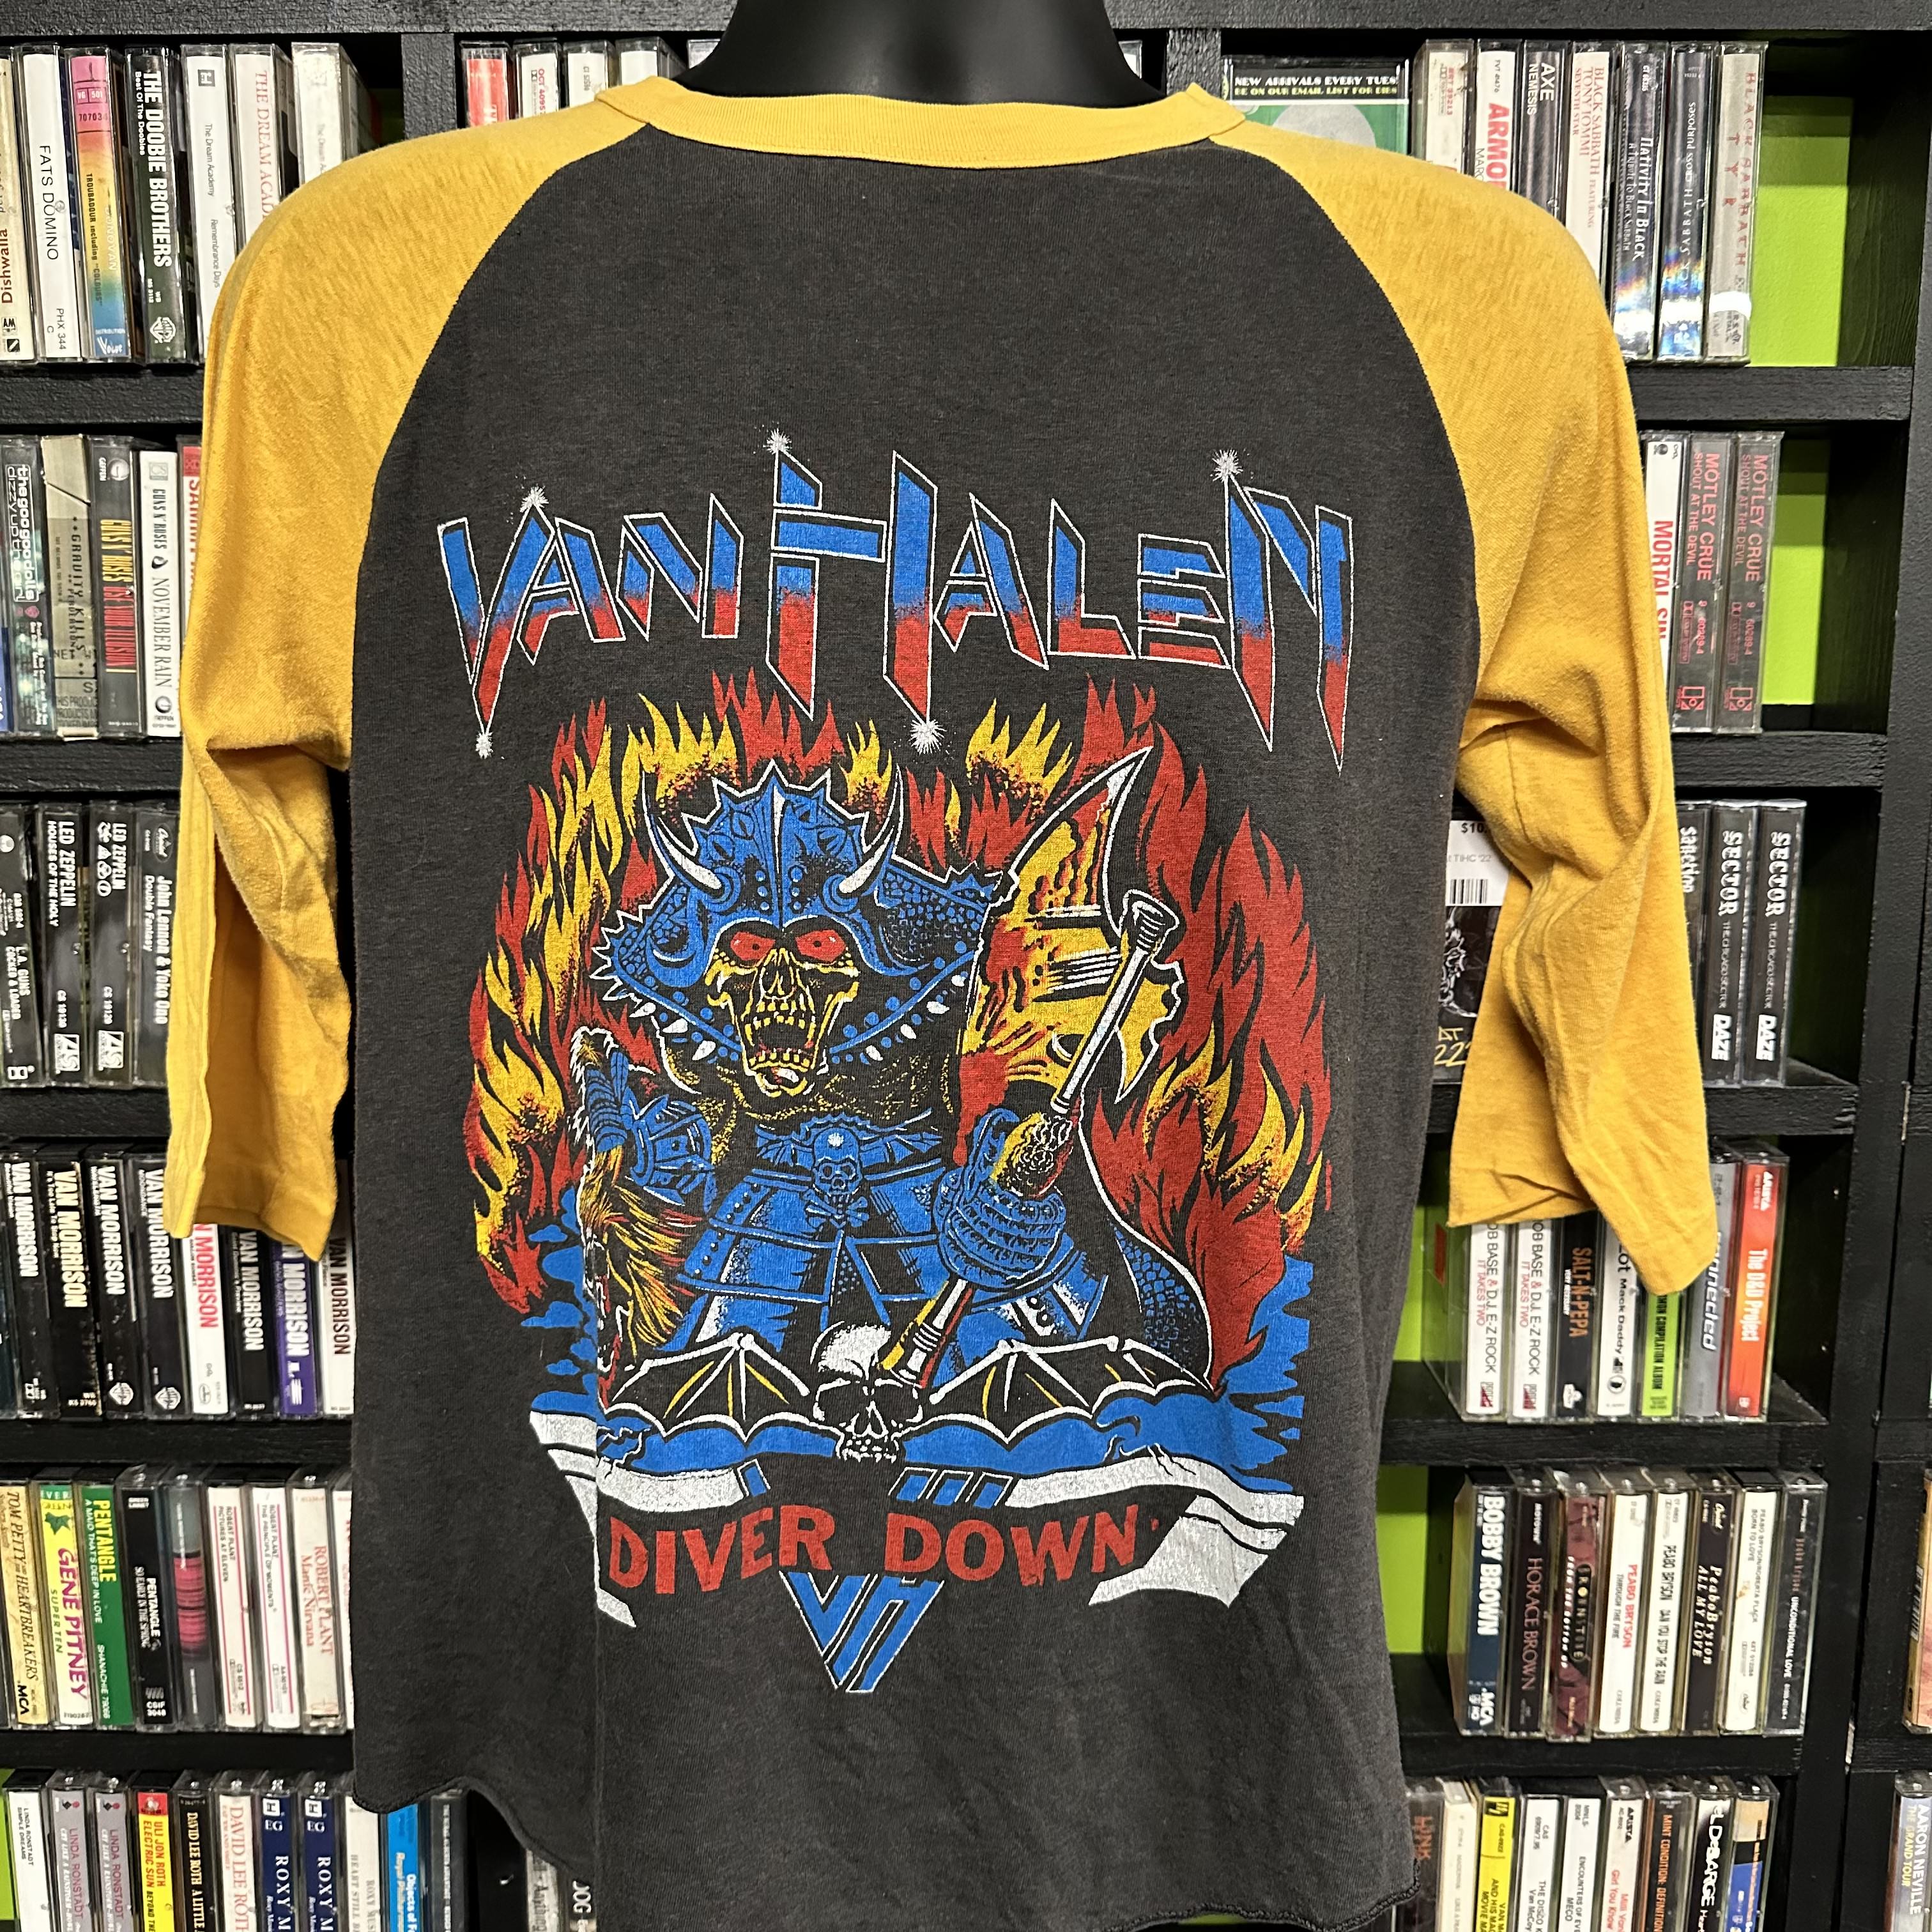 Van Halen 1982 Diver Down Raglan/Baseball T-Shirt, Grey w/Yellow Arms, S (Measures 23.5” Waist, 26” Long, 19.5 Pit To Pit) - Darkside Records